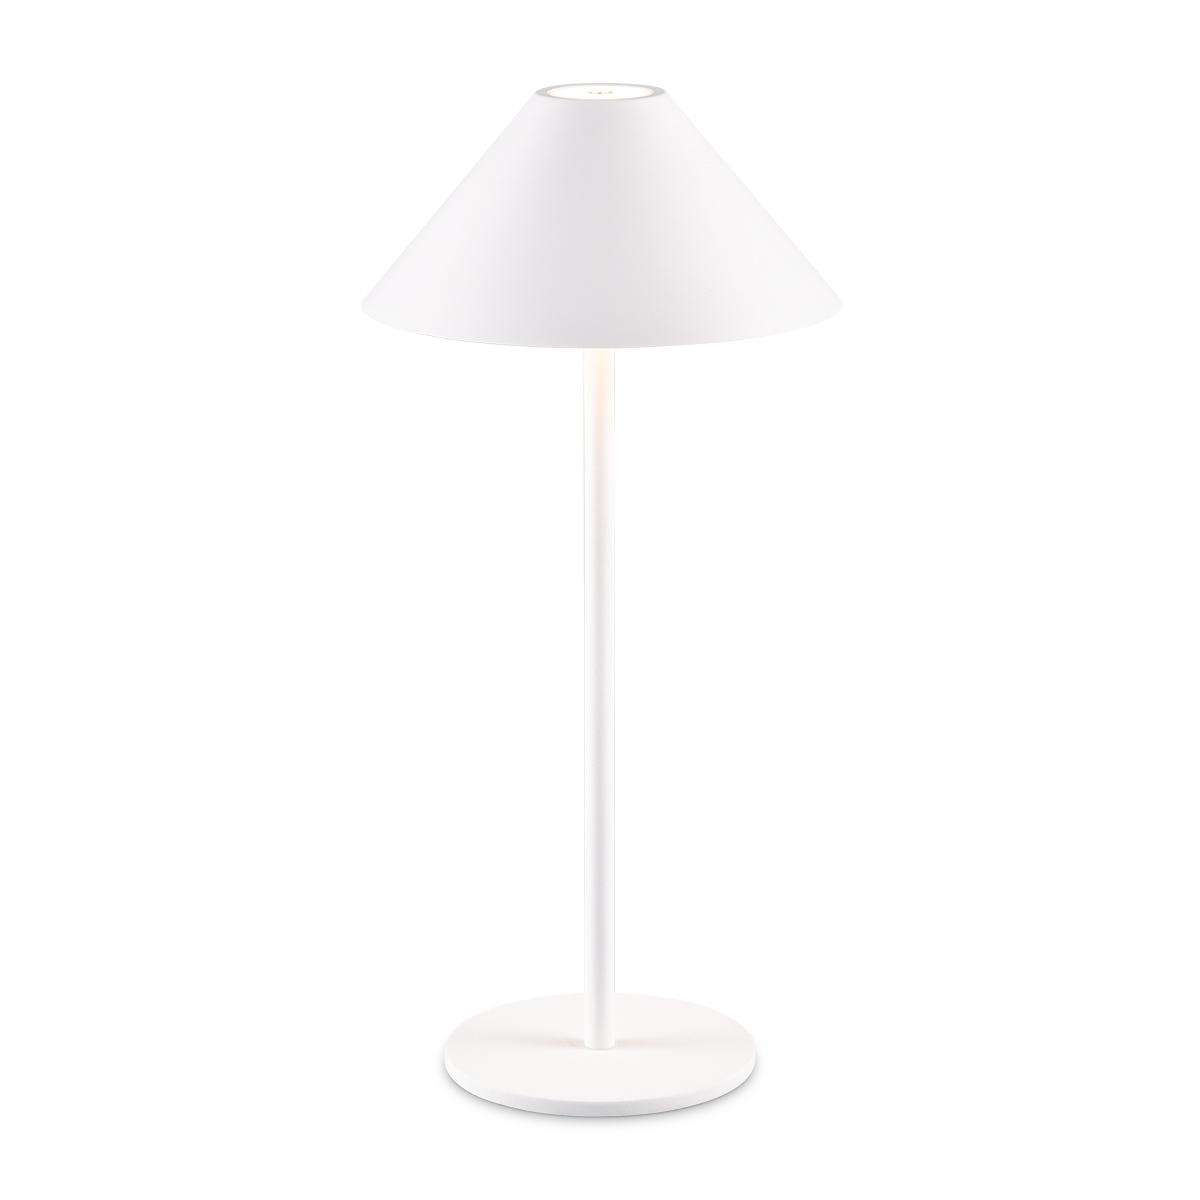 Tangla lighting - TLT7643-01WT - LED table lamp - rechargeable plastic and metal - white - umbrella